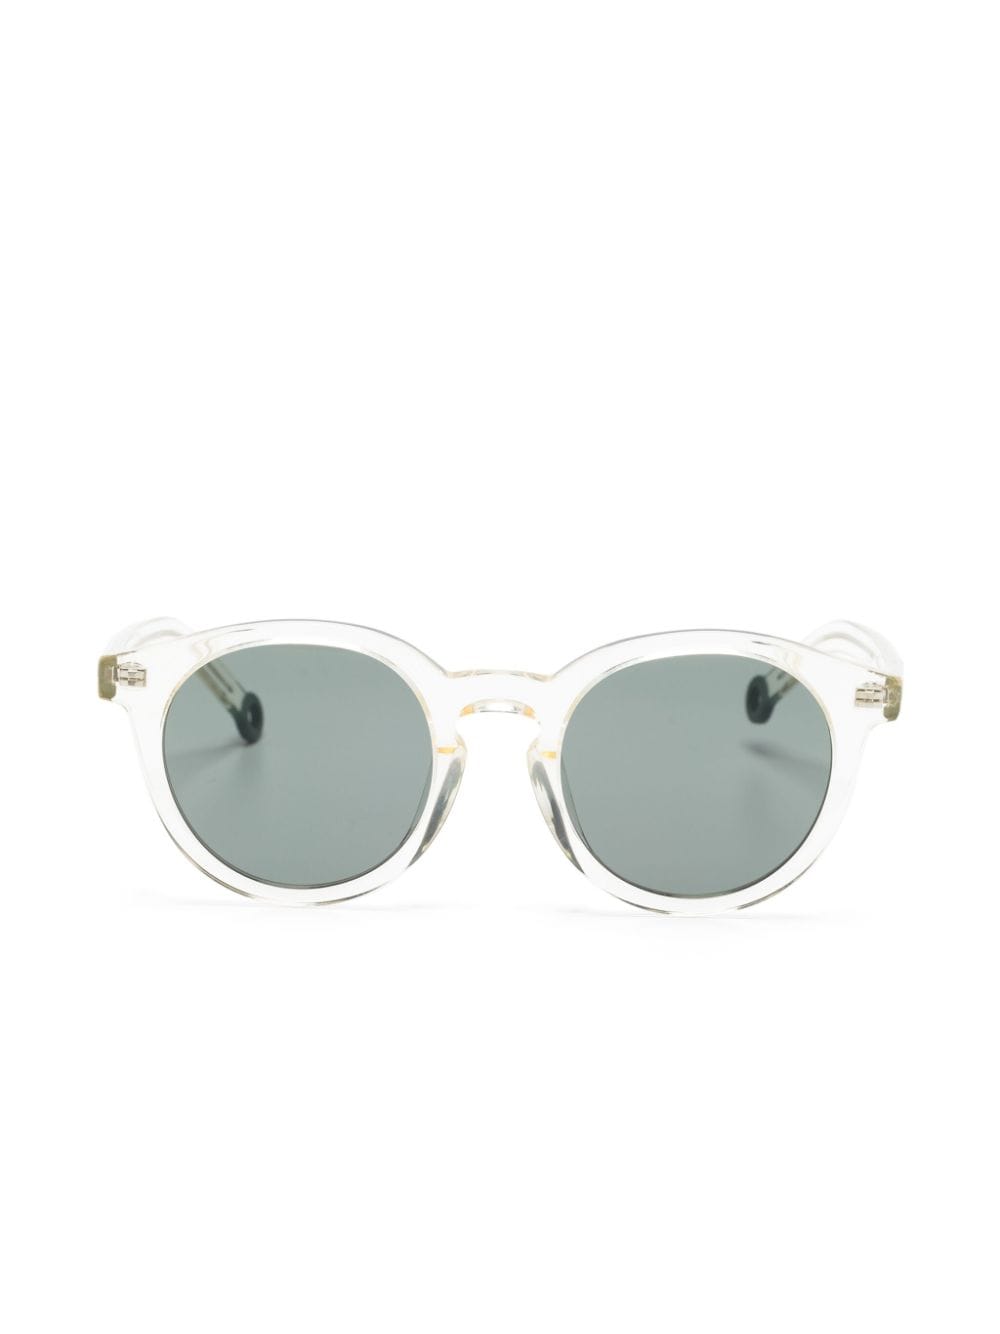 Kaleos McCallister 4 translucent-frame sunglasses - Green von Kaleos